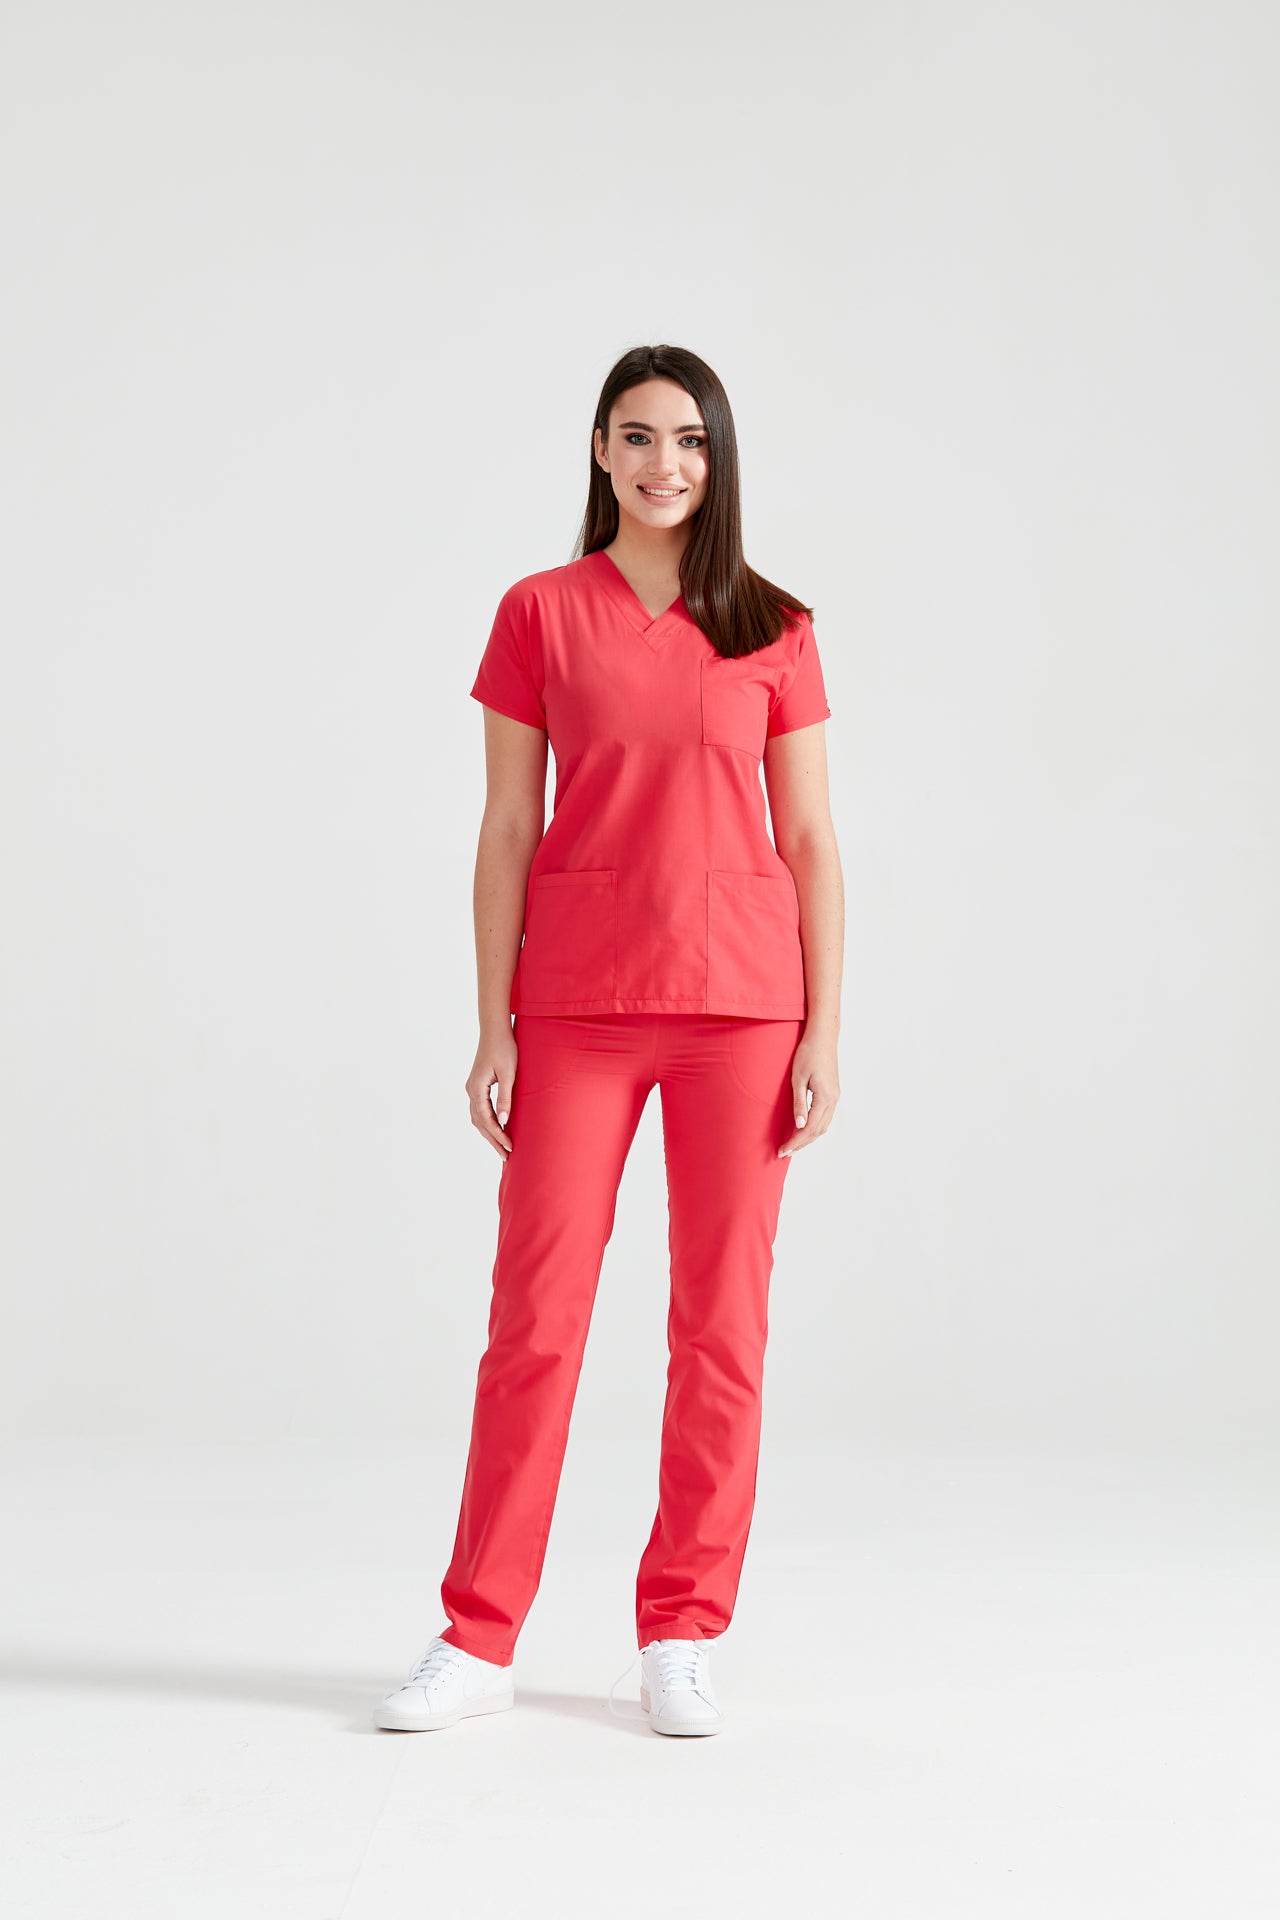  Asistenta medicala imbracata in costum din elastan rosu corai Coral, vedere din picioare